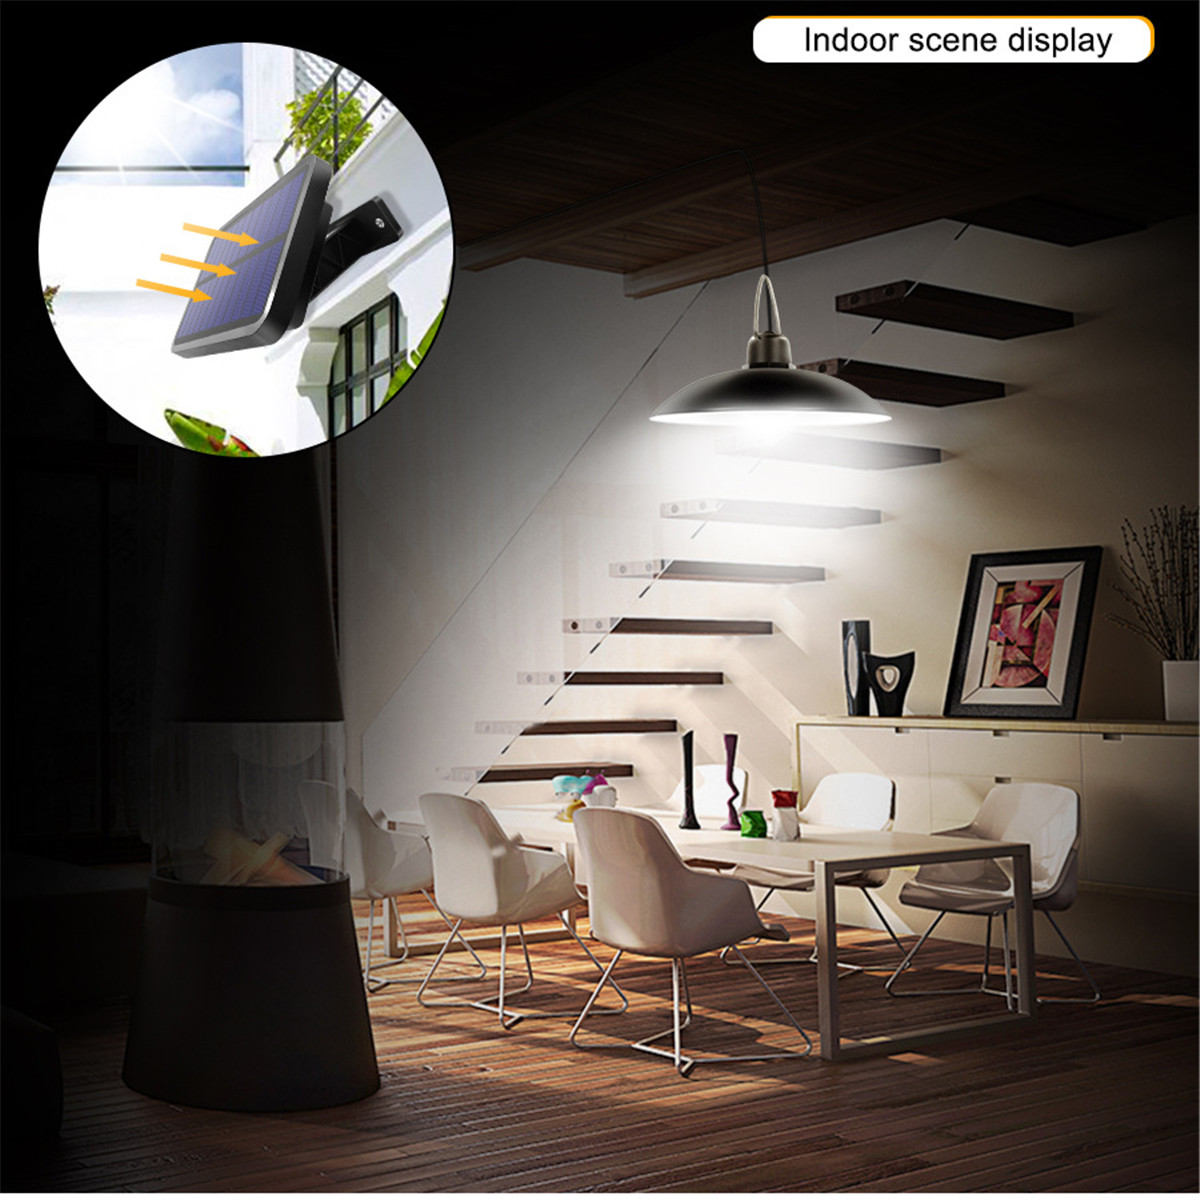 260-Lumen-Solar-Pendant-Light-Outdoor-Indoor-Solar-Lamp-With-Line-Warm-WhiteWhite-Lighting-For-Campi-1761765-9